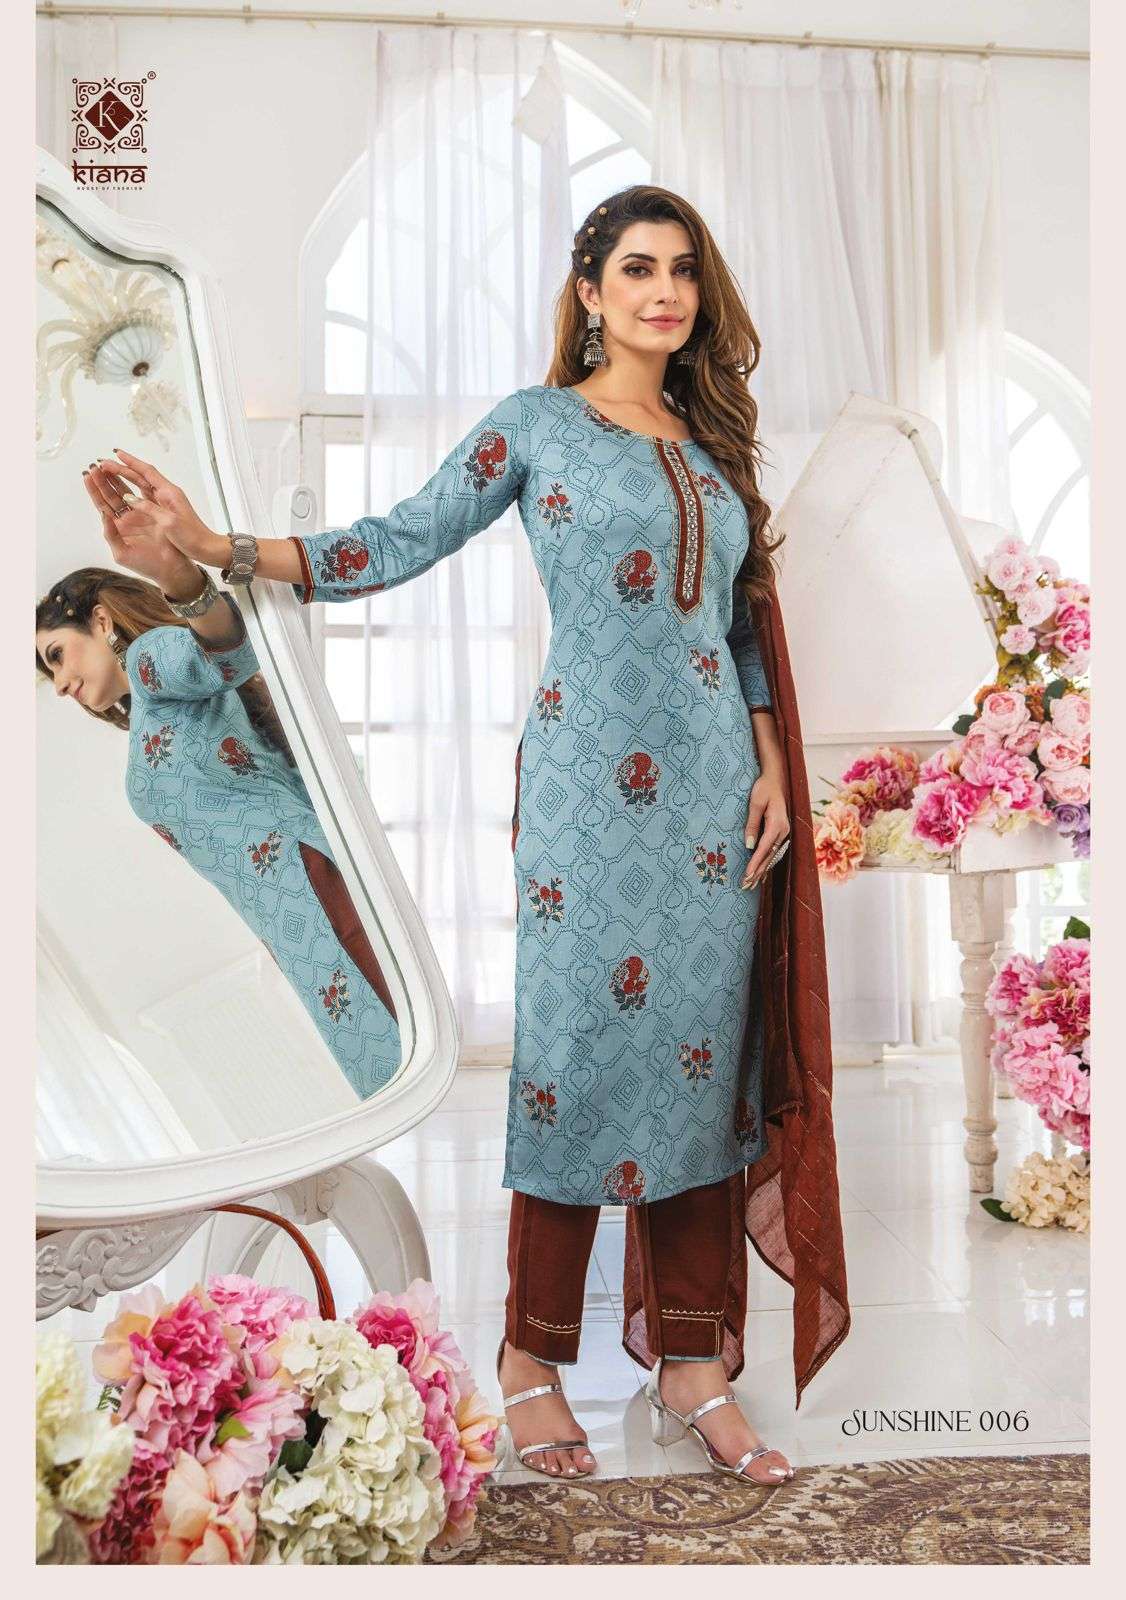 kiana fashion sunshine 001-008 series straight designer kurti bottom dupatta set wholesale price